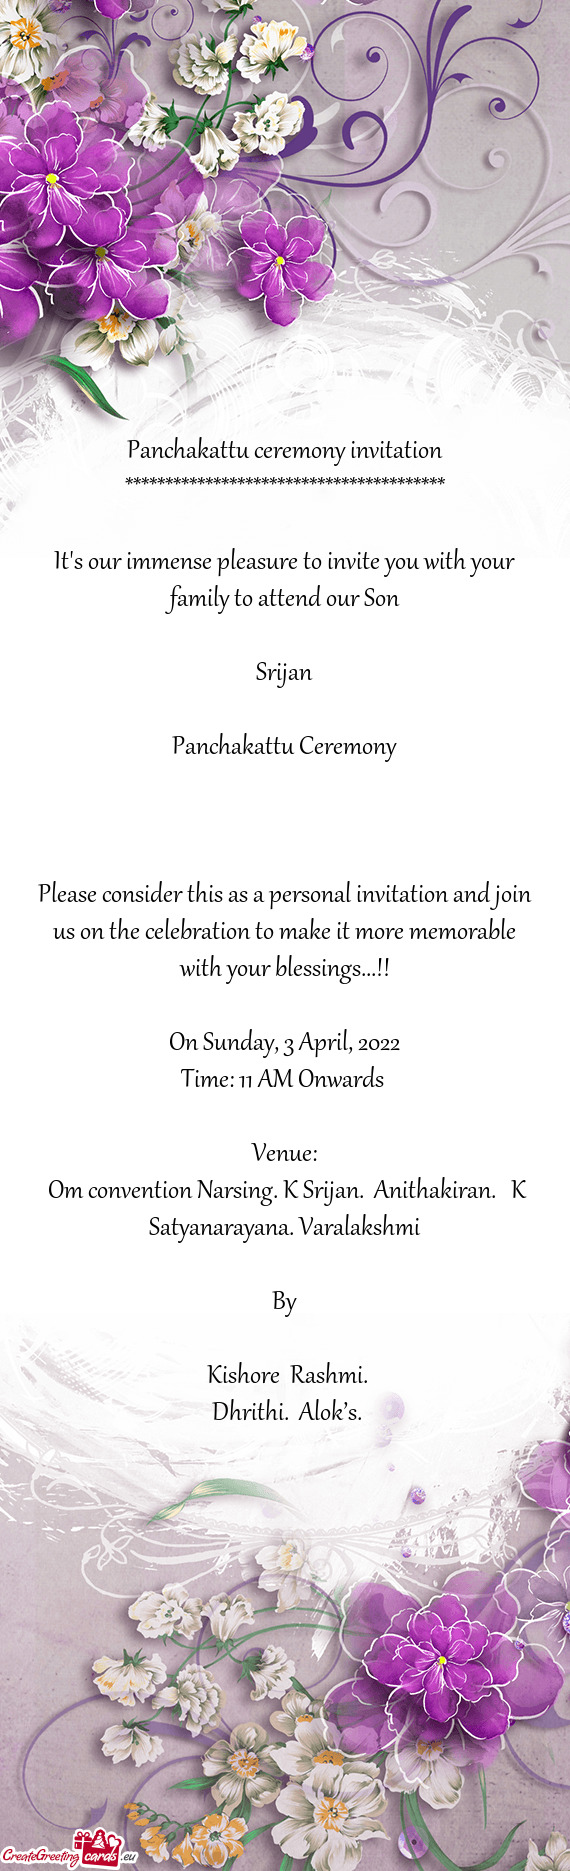 Panchakattu ceremony invitation